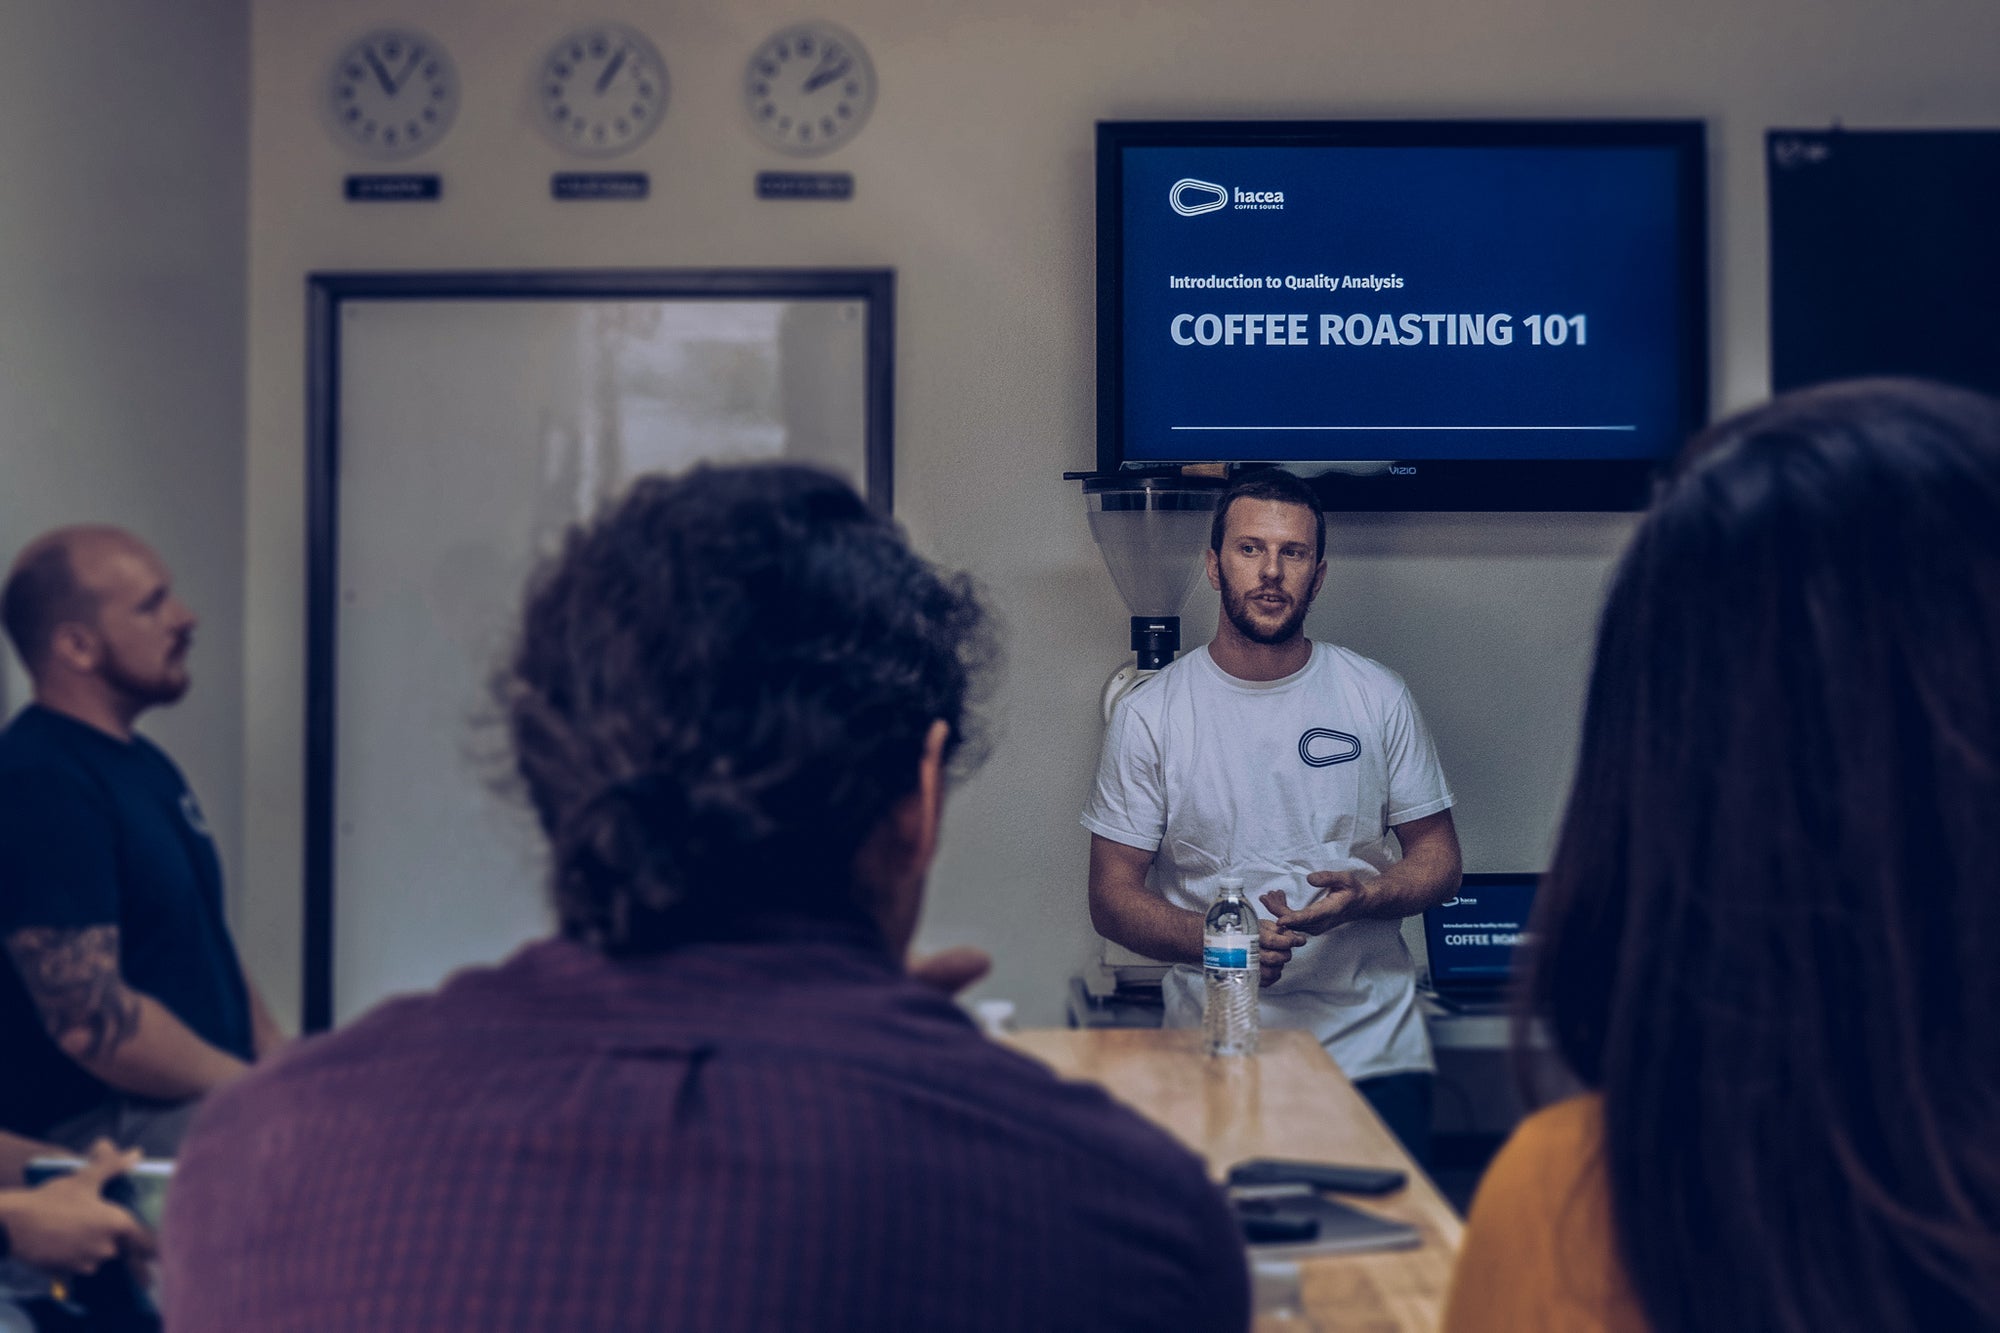 Coffee Roasting 101 - Introduction to Coffee Roasting - November 18th